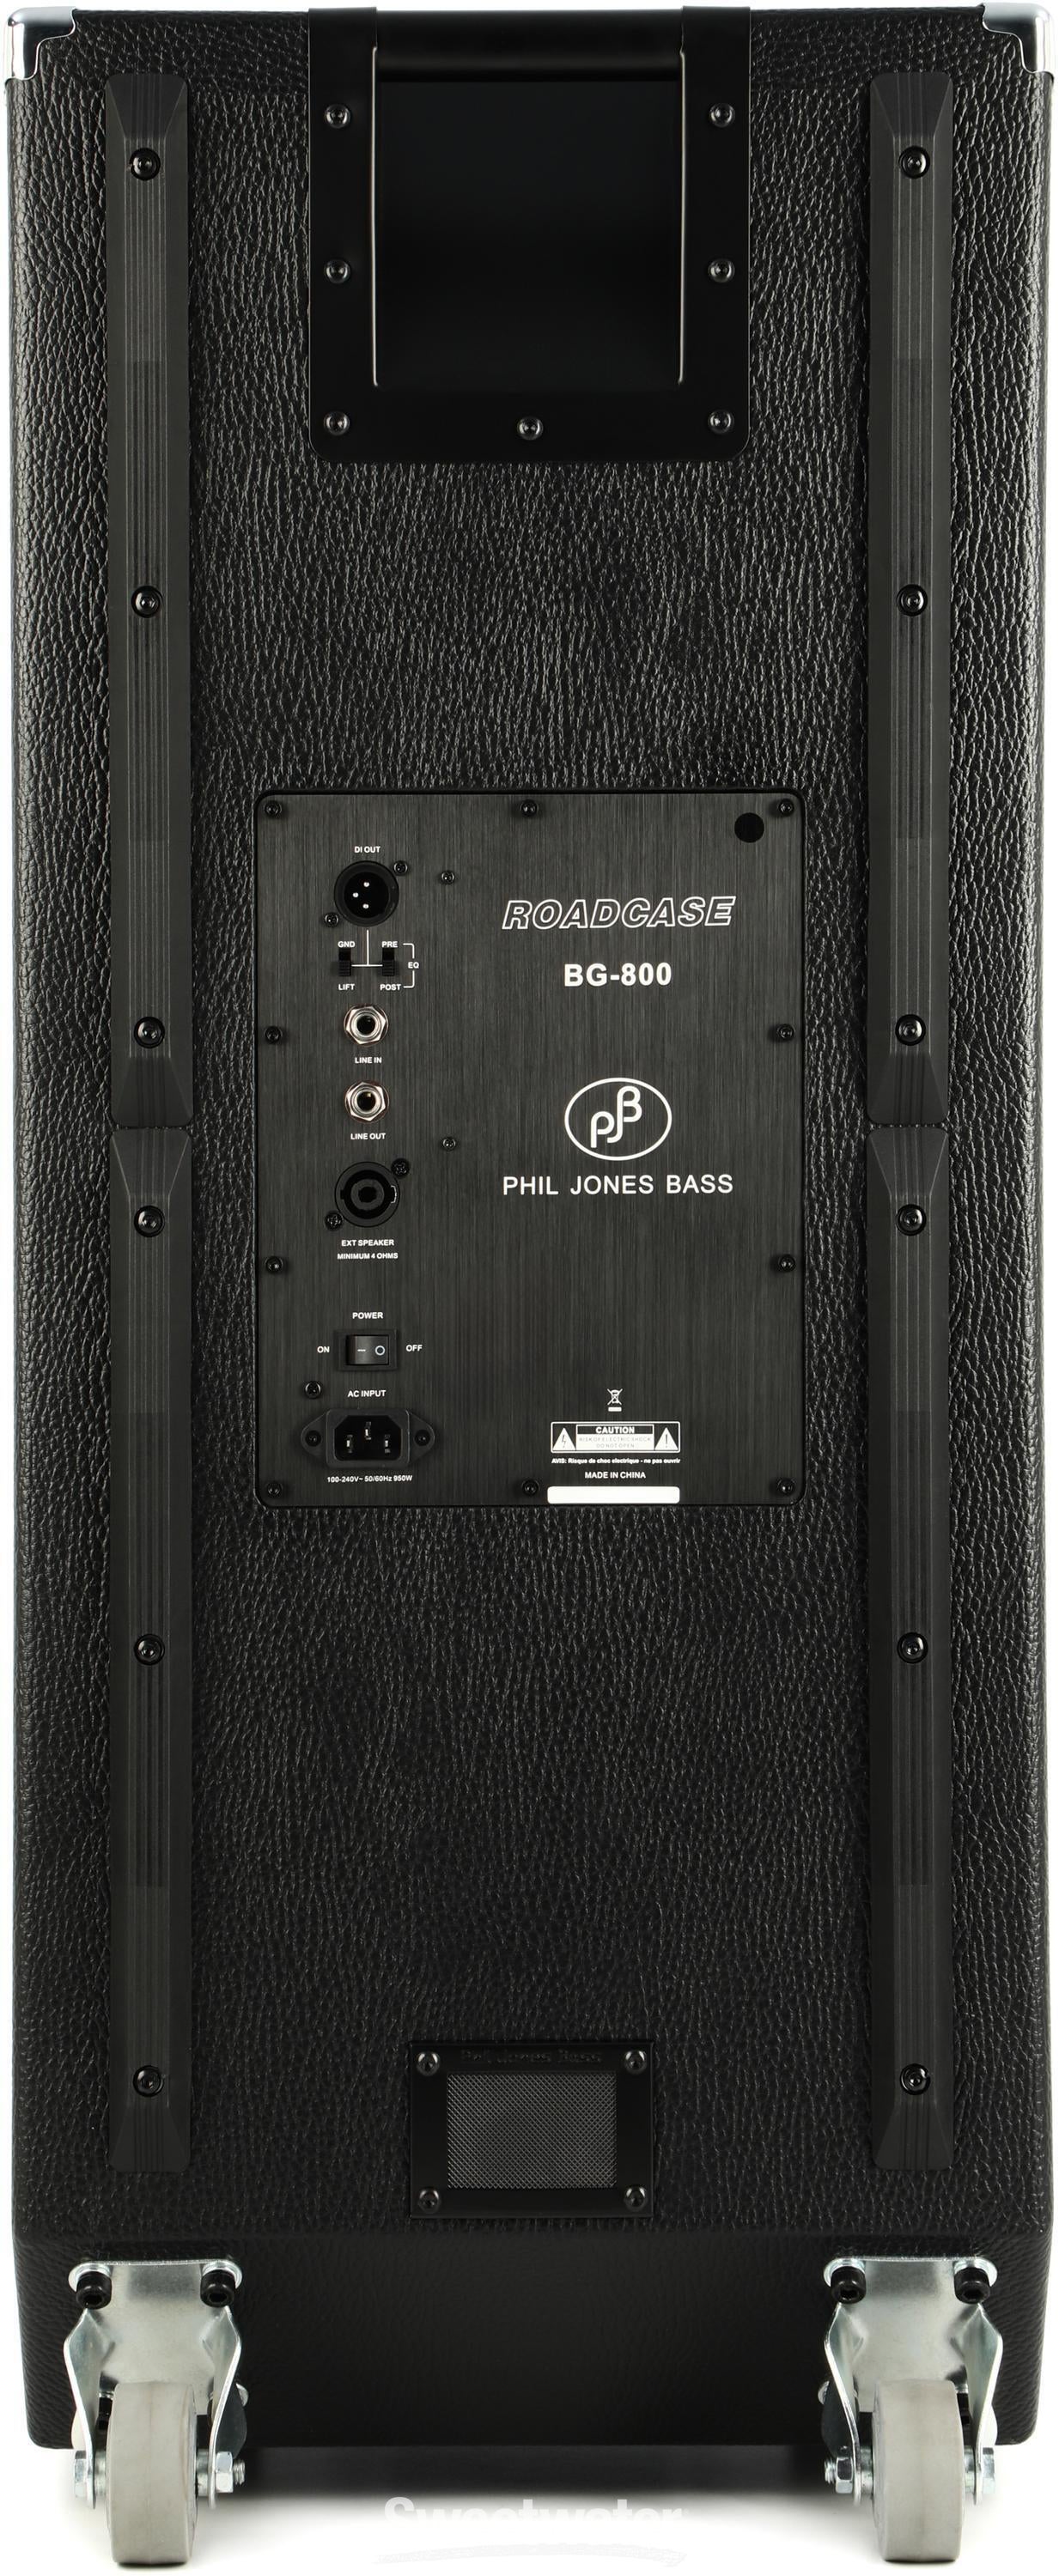 Phil Jones Bass Roadcase BG-800 950-watt 12 x 5-inch Bass Combo